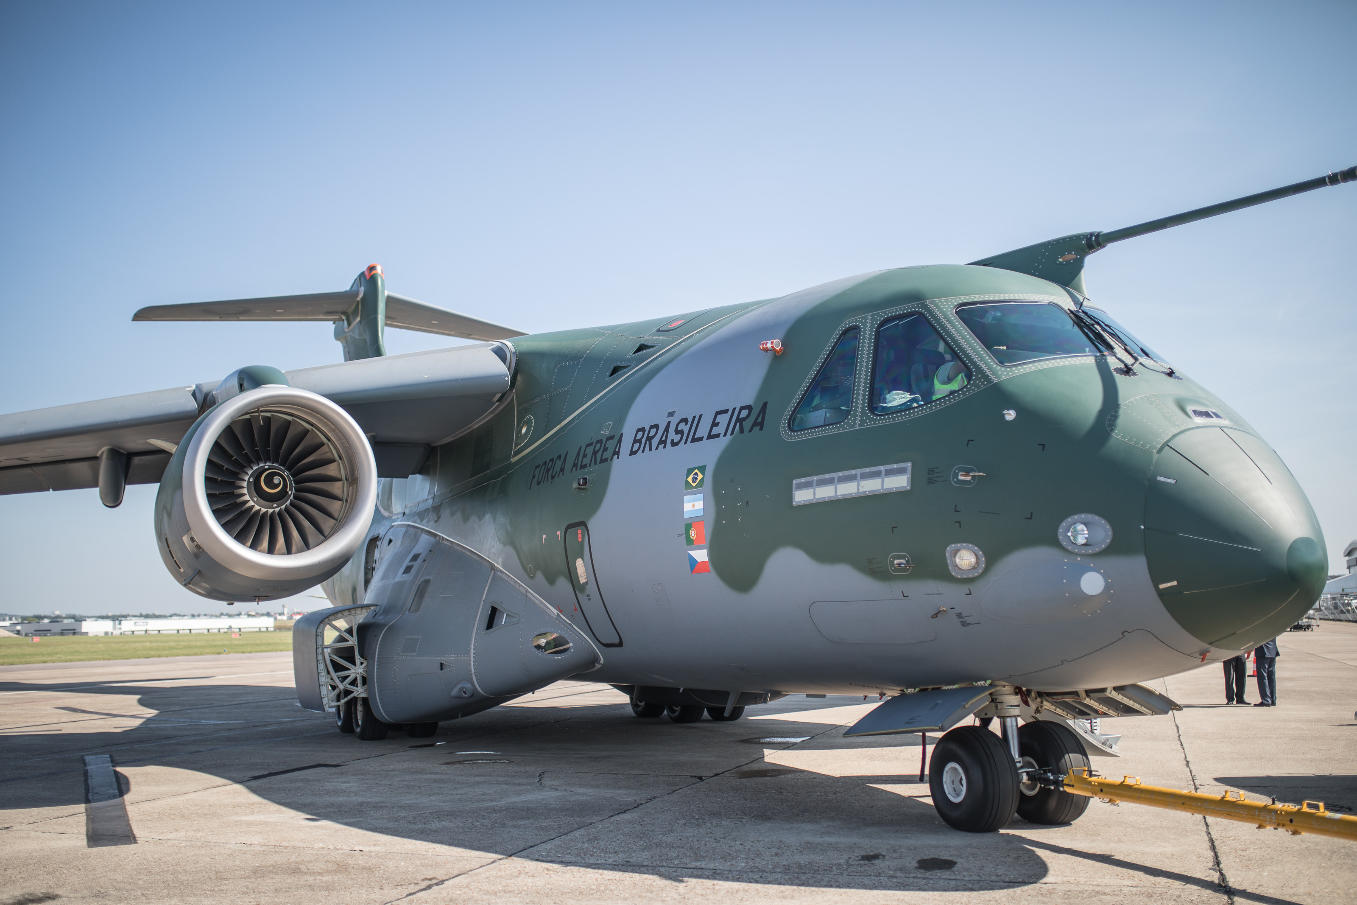 KC-390 flight testing moves to U.S.